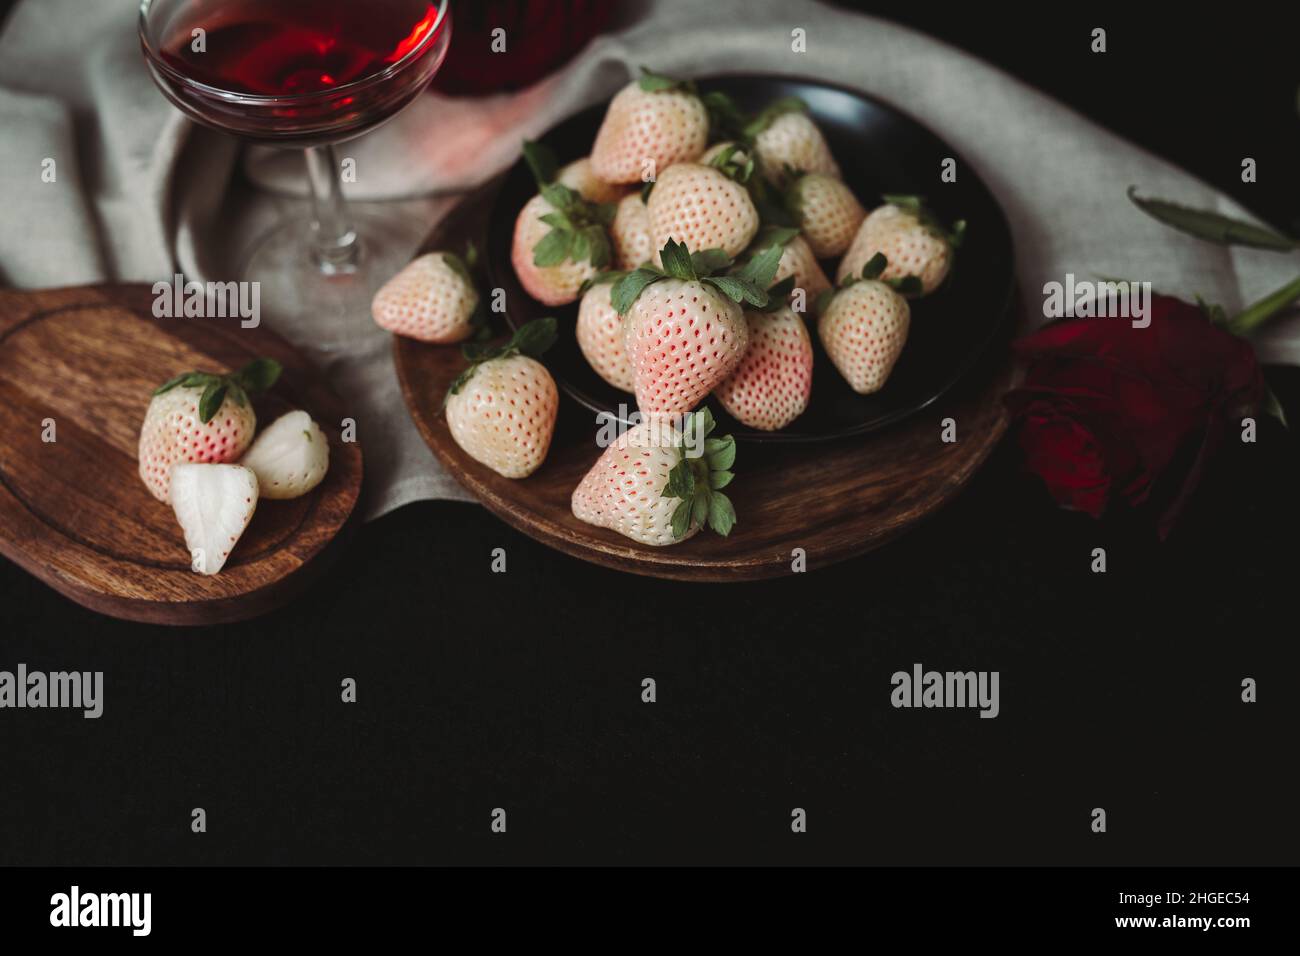 Moody Valentine Still Life. Pineberry on Wooden Plate with Dark Background. White Strawberry. Dark Valentine Aesthetic. Strawberries and Wine. Stock Photo